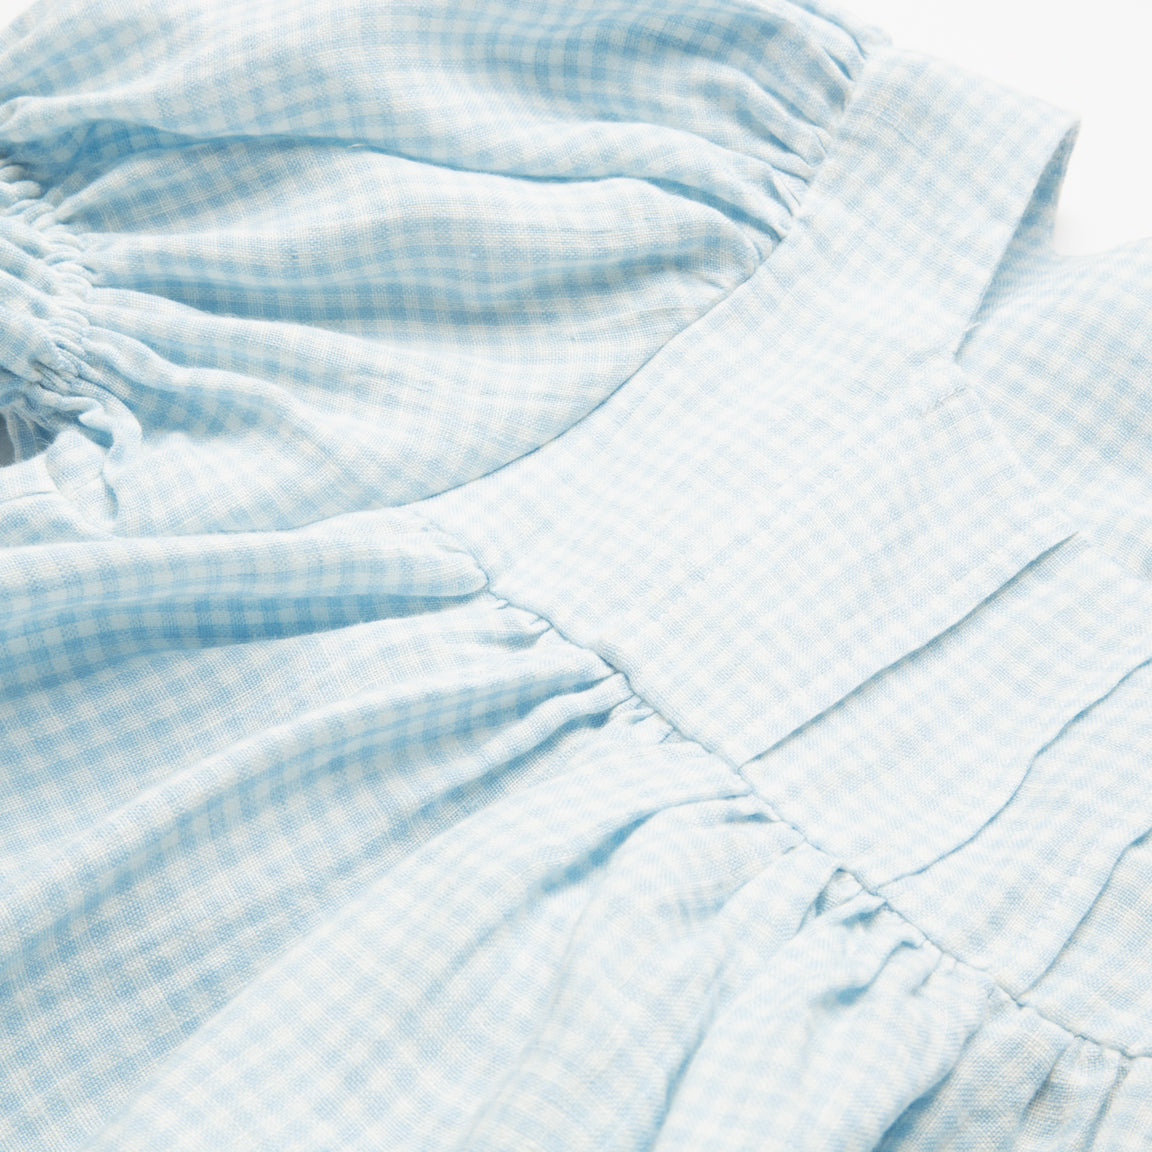 Skipping Dress - Baby Blue & Milk Mini Check Linen